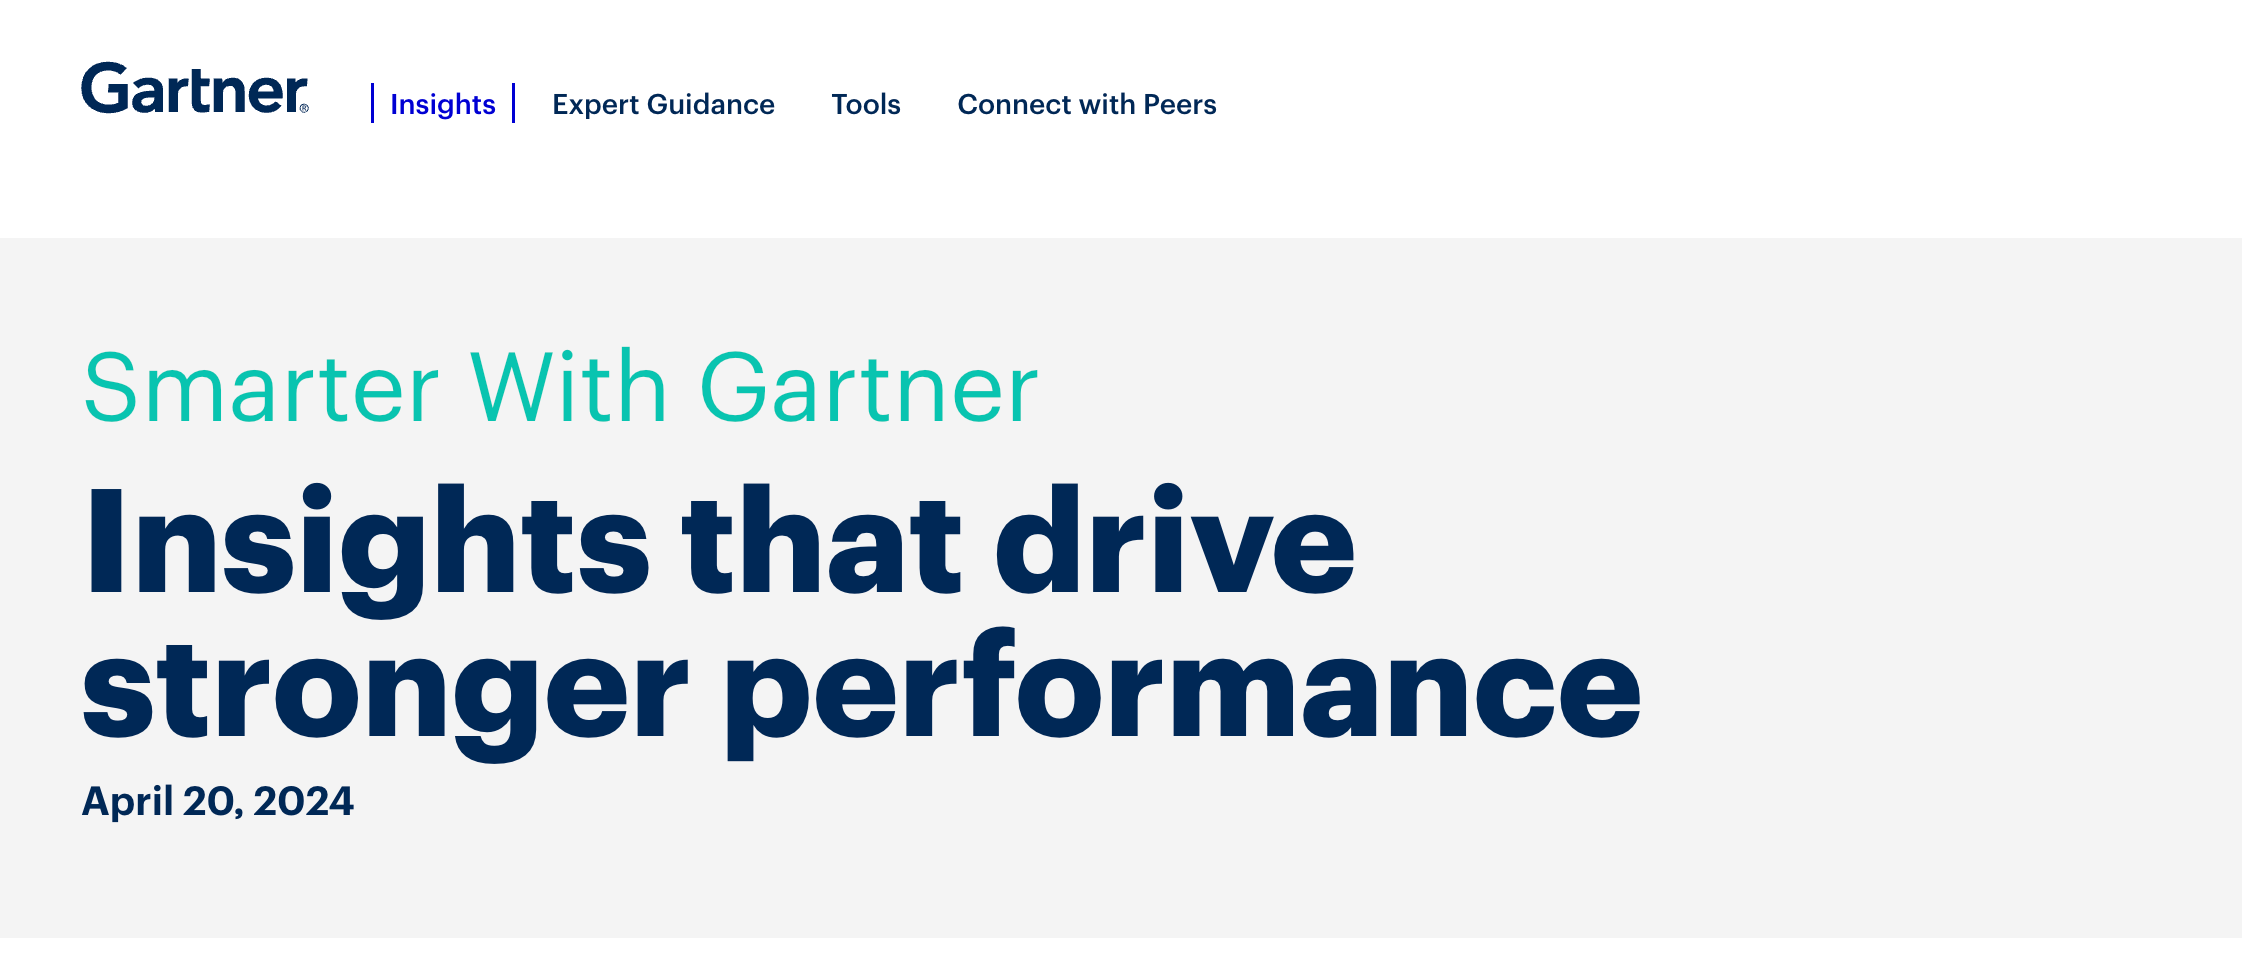 Gartner insights that drive stronger performance